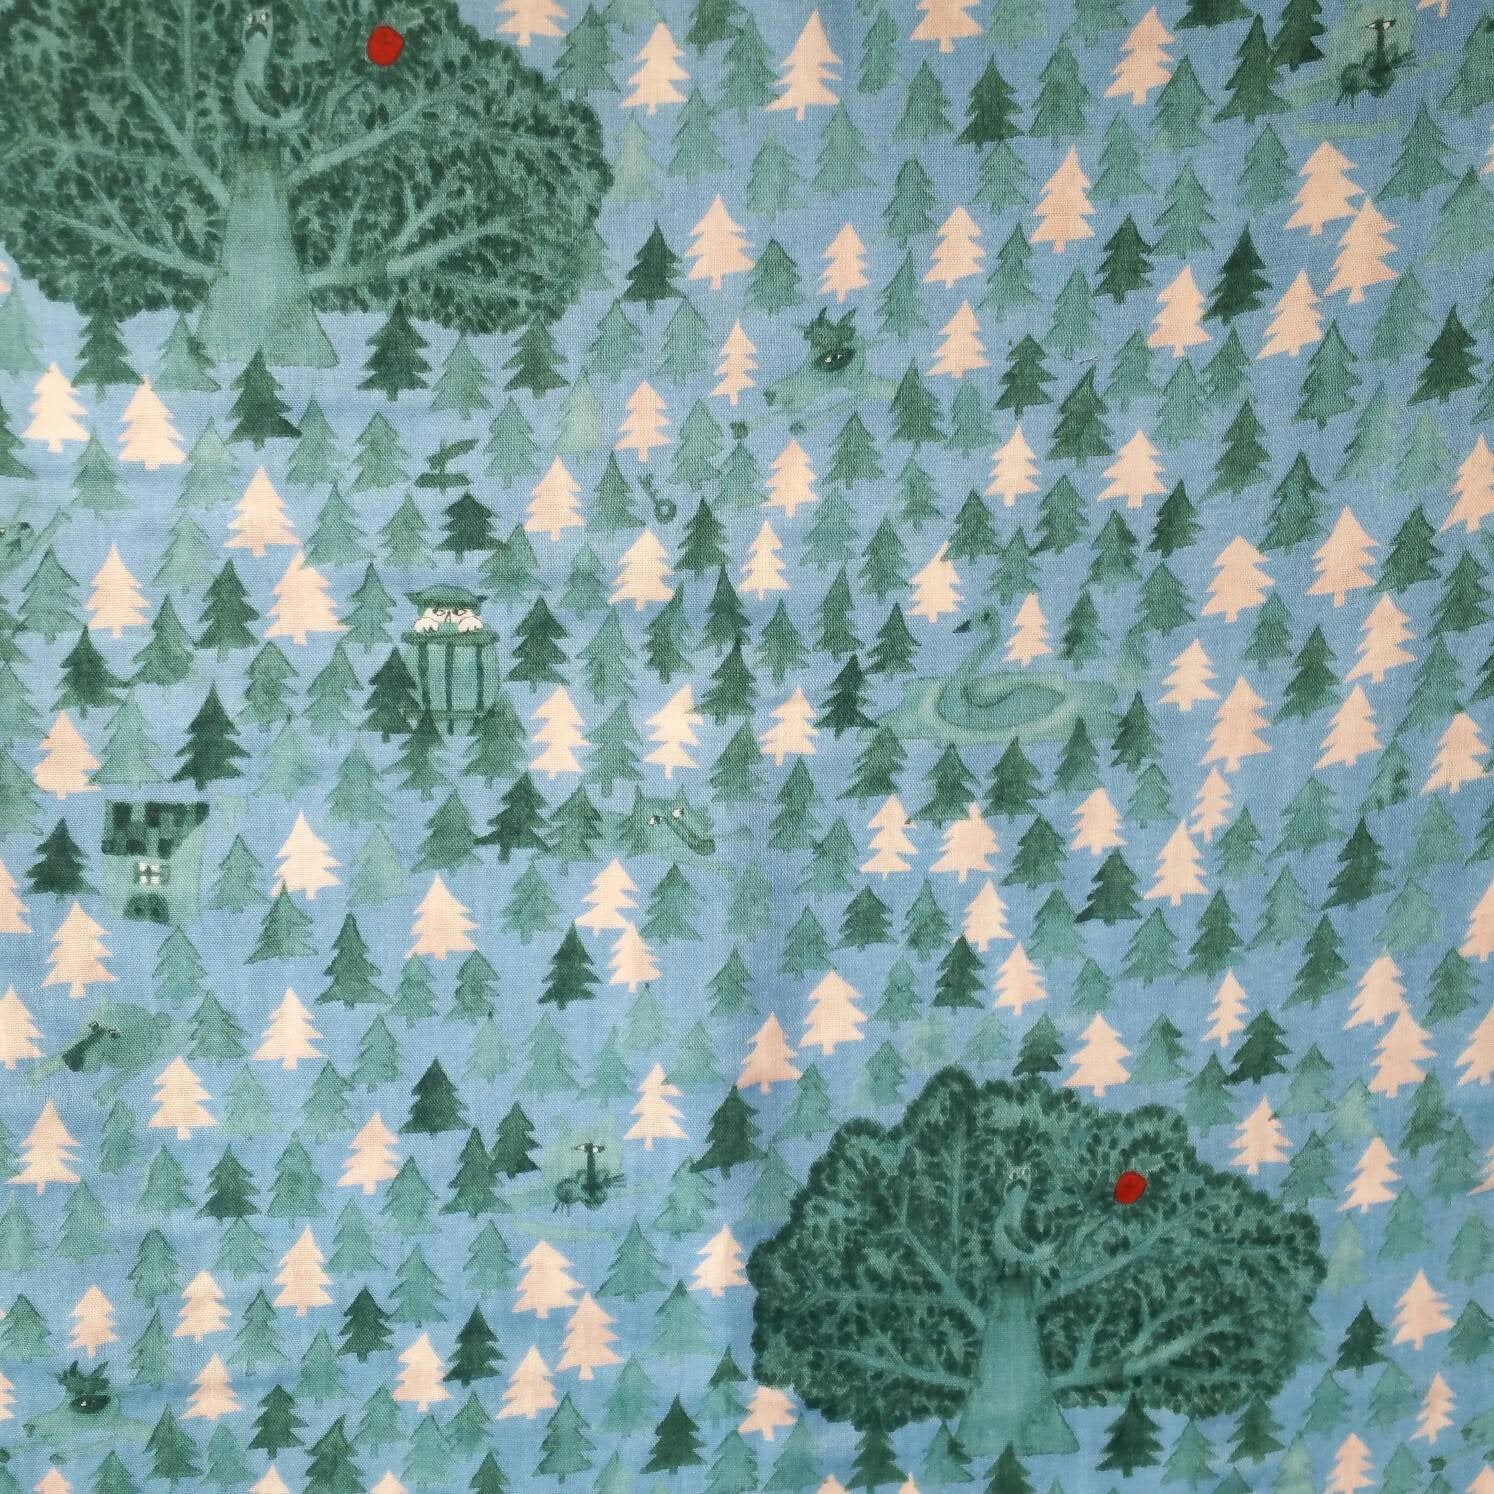 Blue Christmas Fabric 